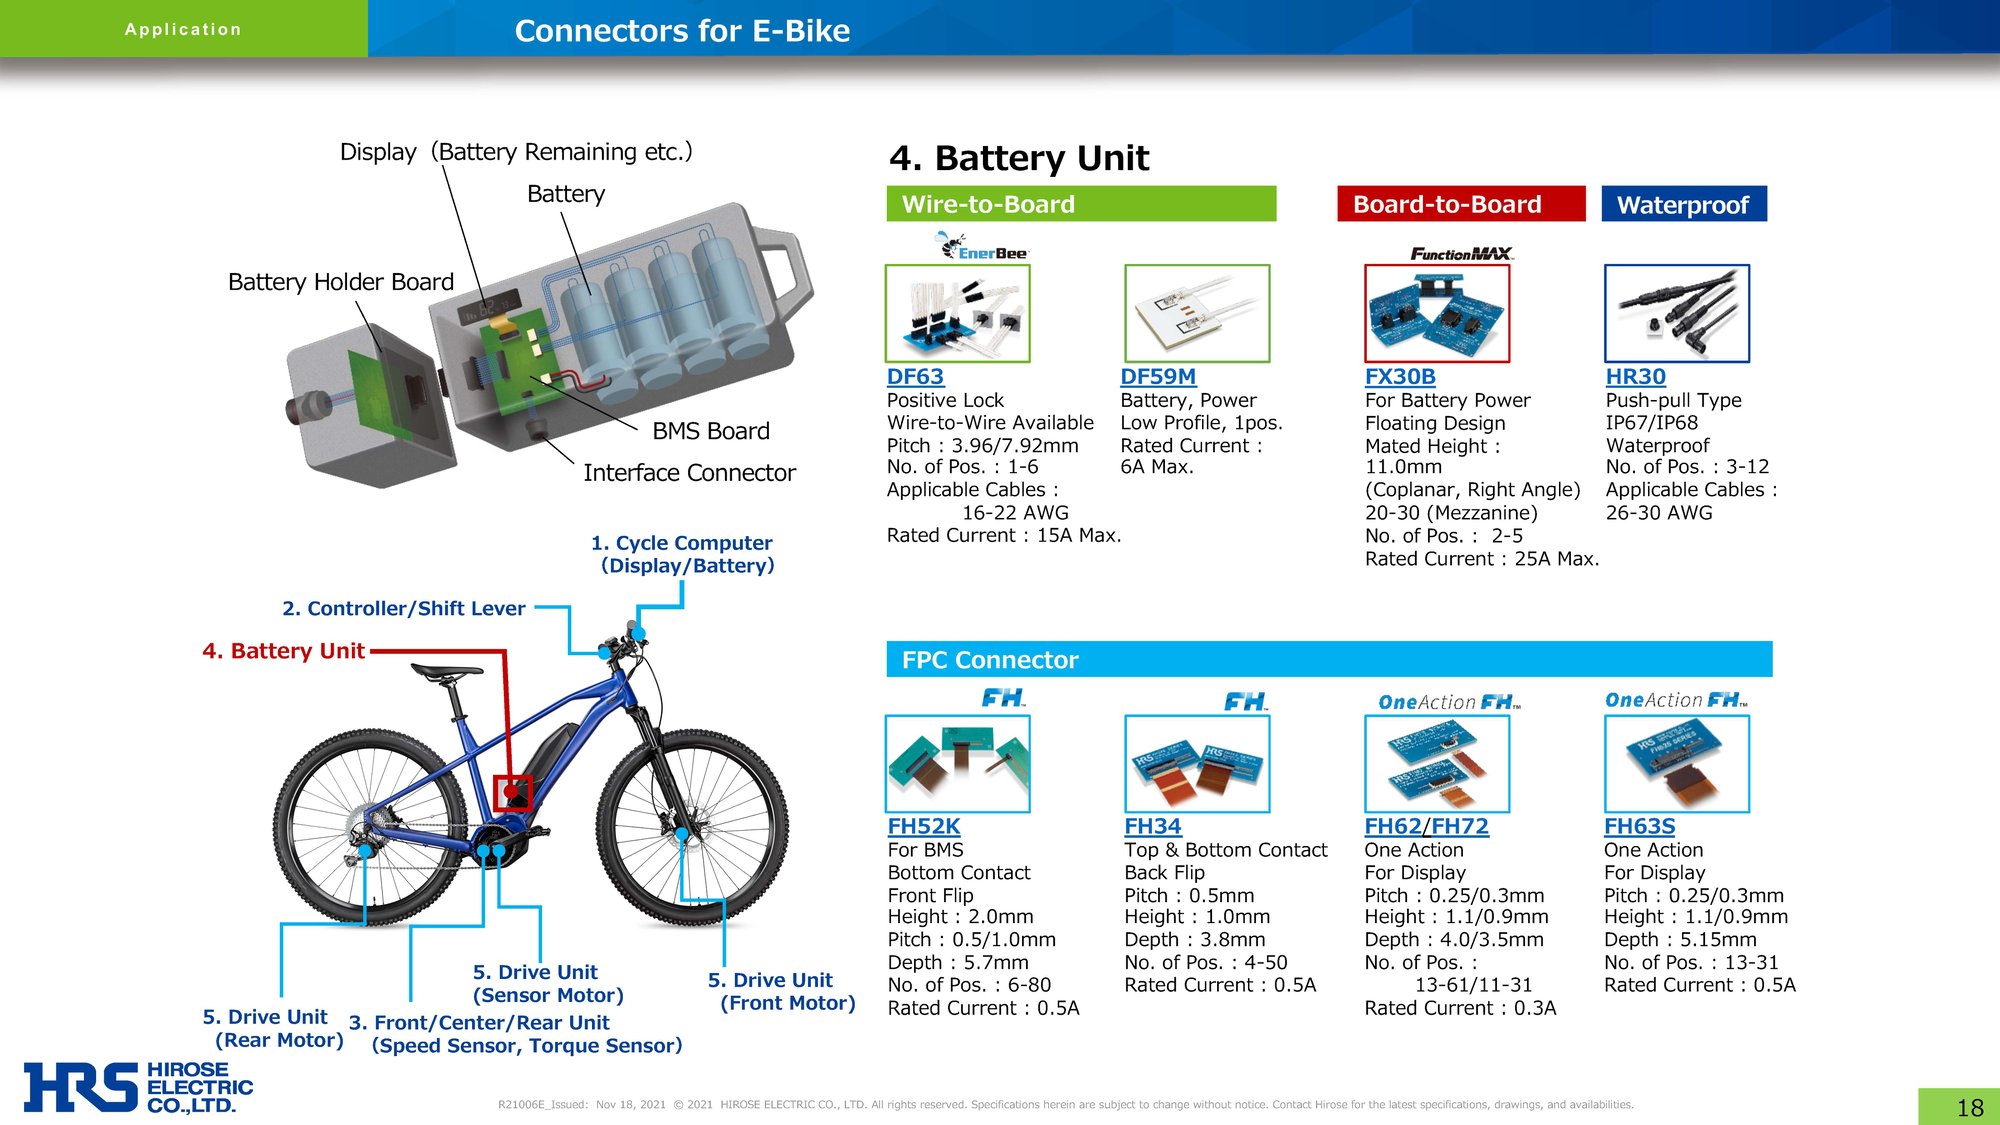 Schematic representation of an e-bike battery unit detailing Hirose connector integration.